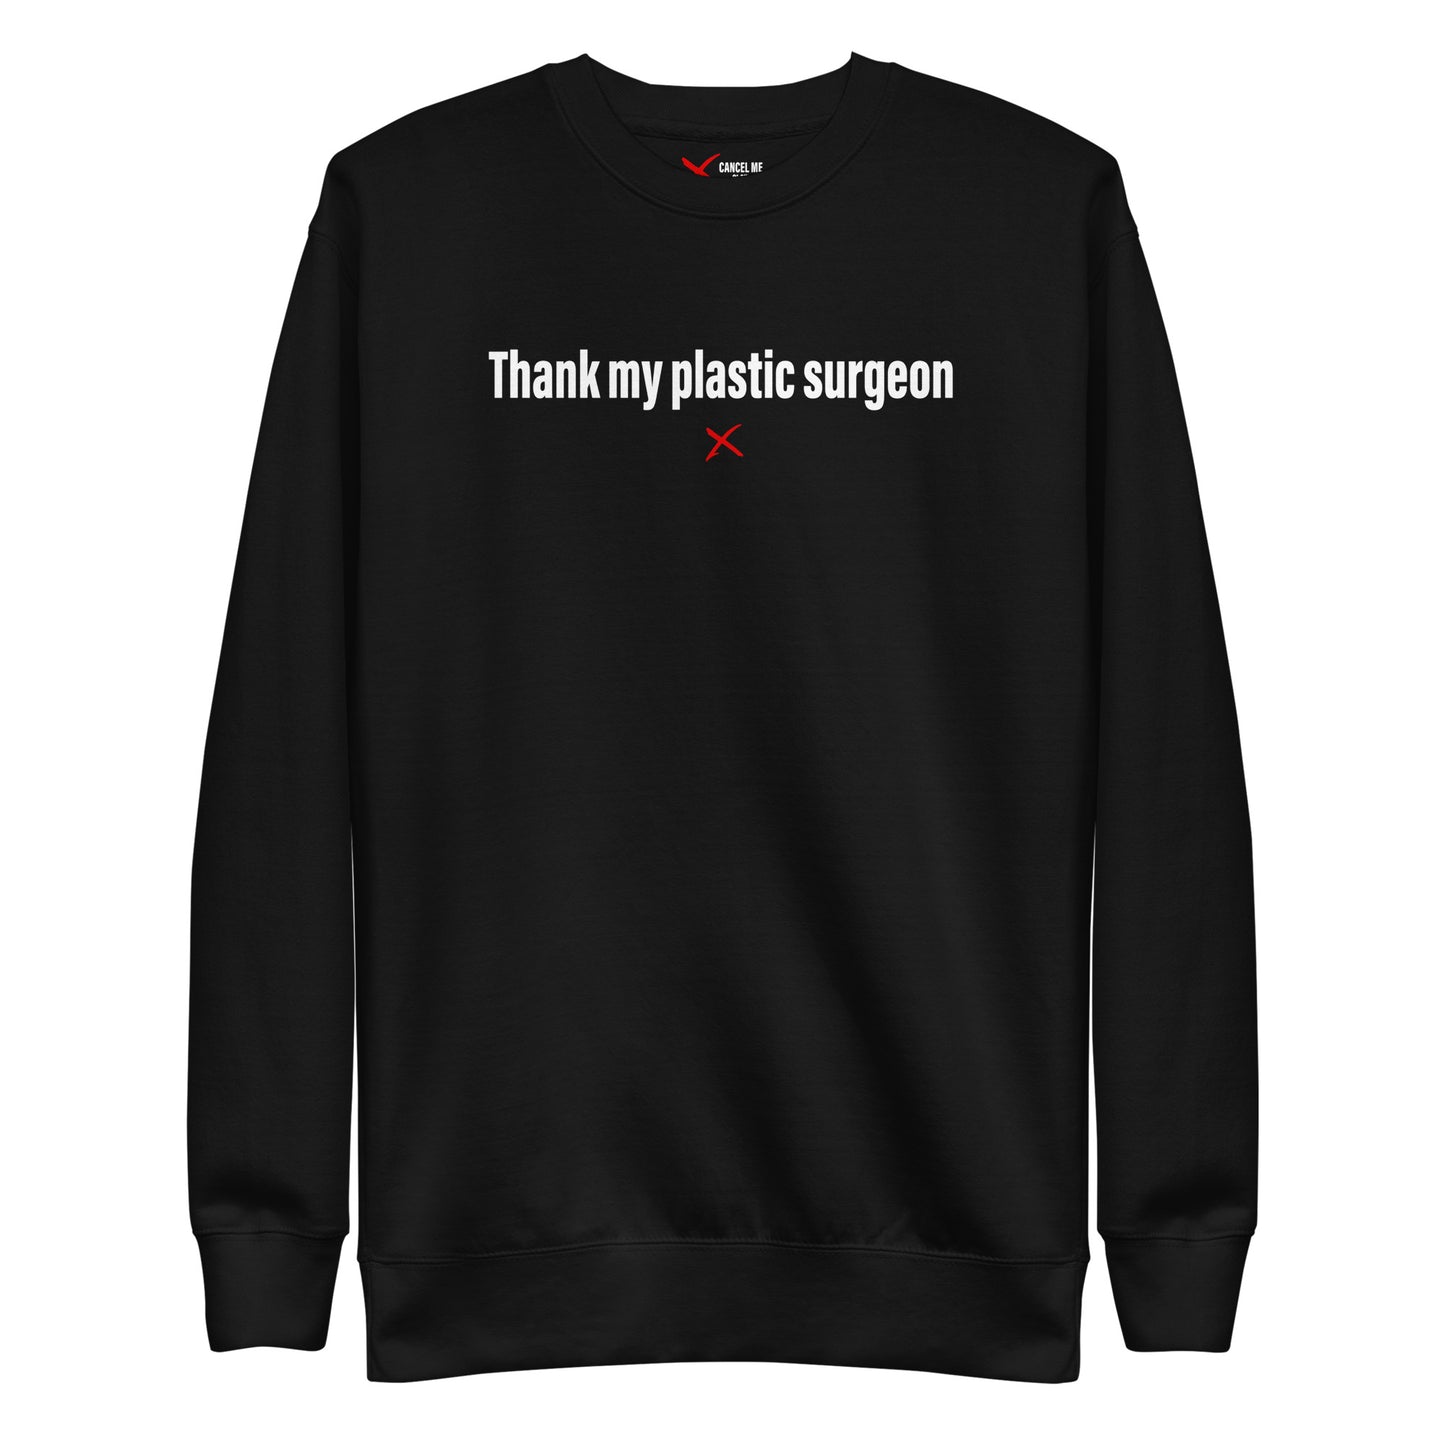 Thank my plastic surgeon - Sweatshirt